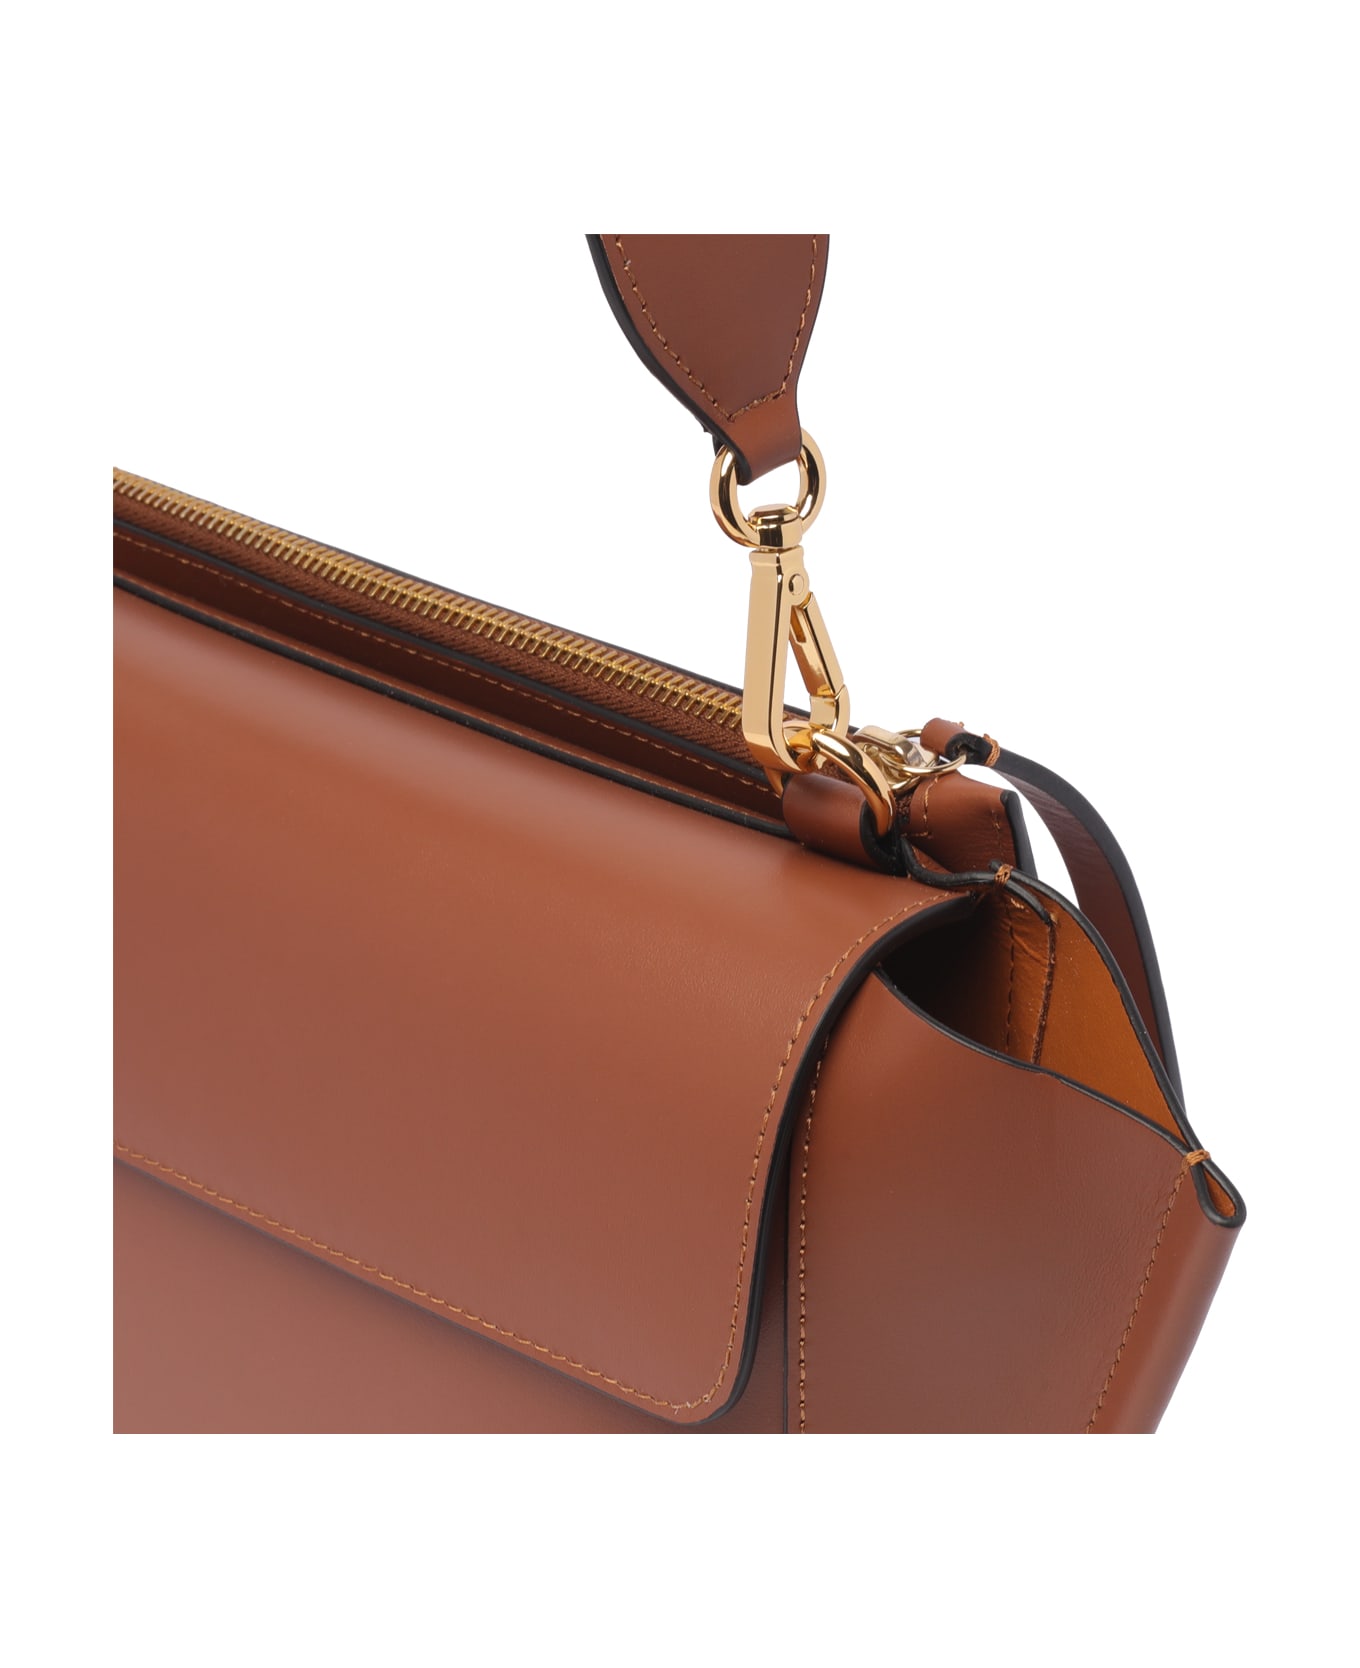 Wandler Medium Hortnesia Handbag - Brown